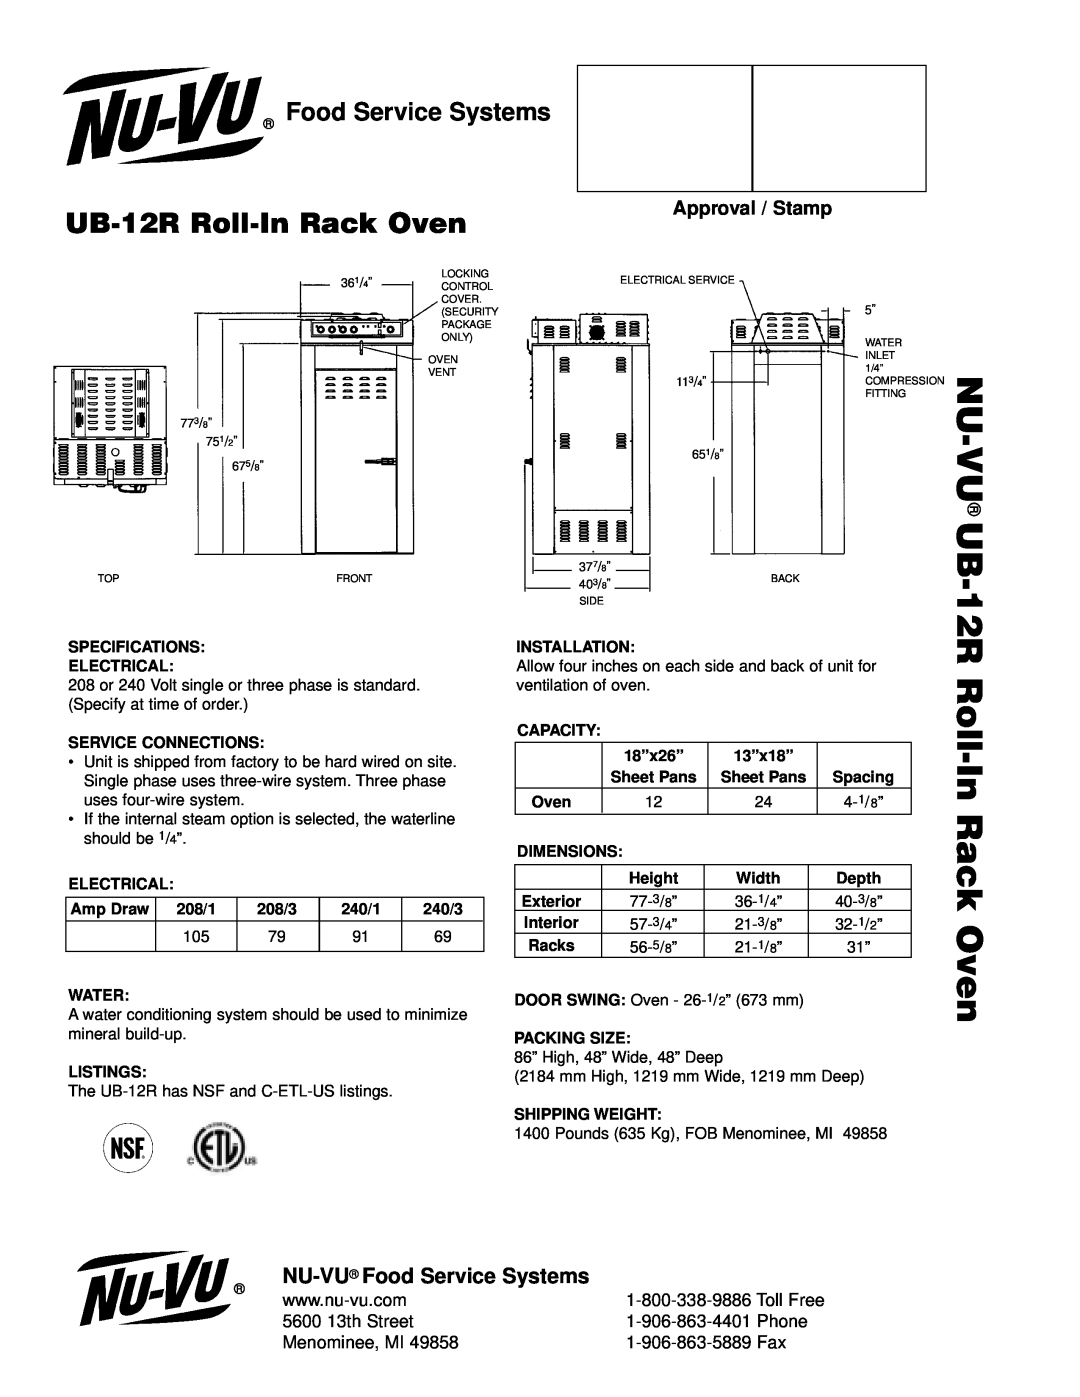 Nu-Vu manual NU-VU UB-12R Roll-InRack Oven, NU-VU Food Service Systems, Approval / Stamp, 5600 13th Street, Phone 